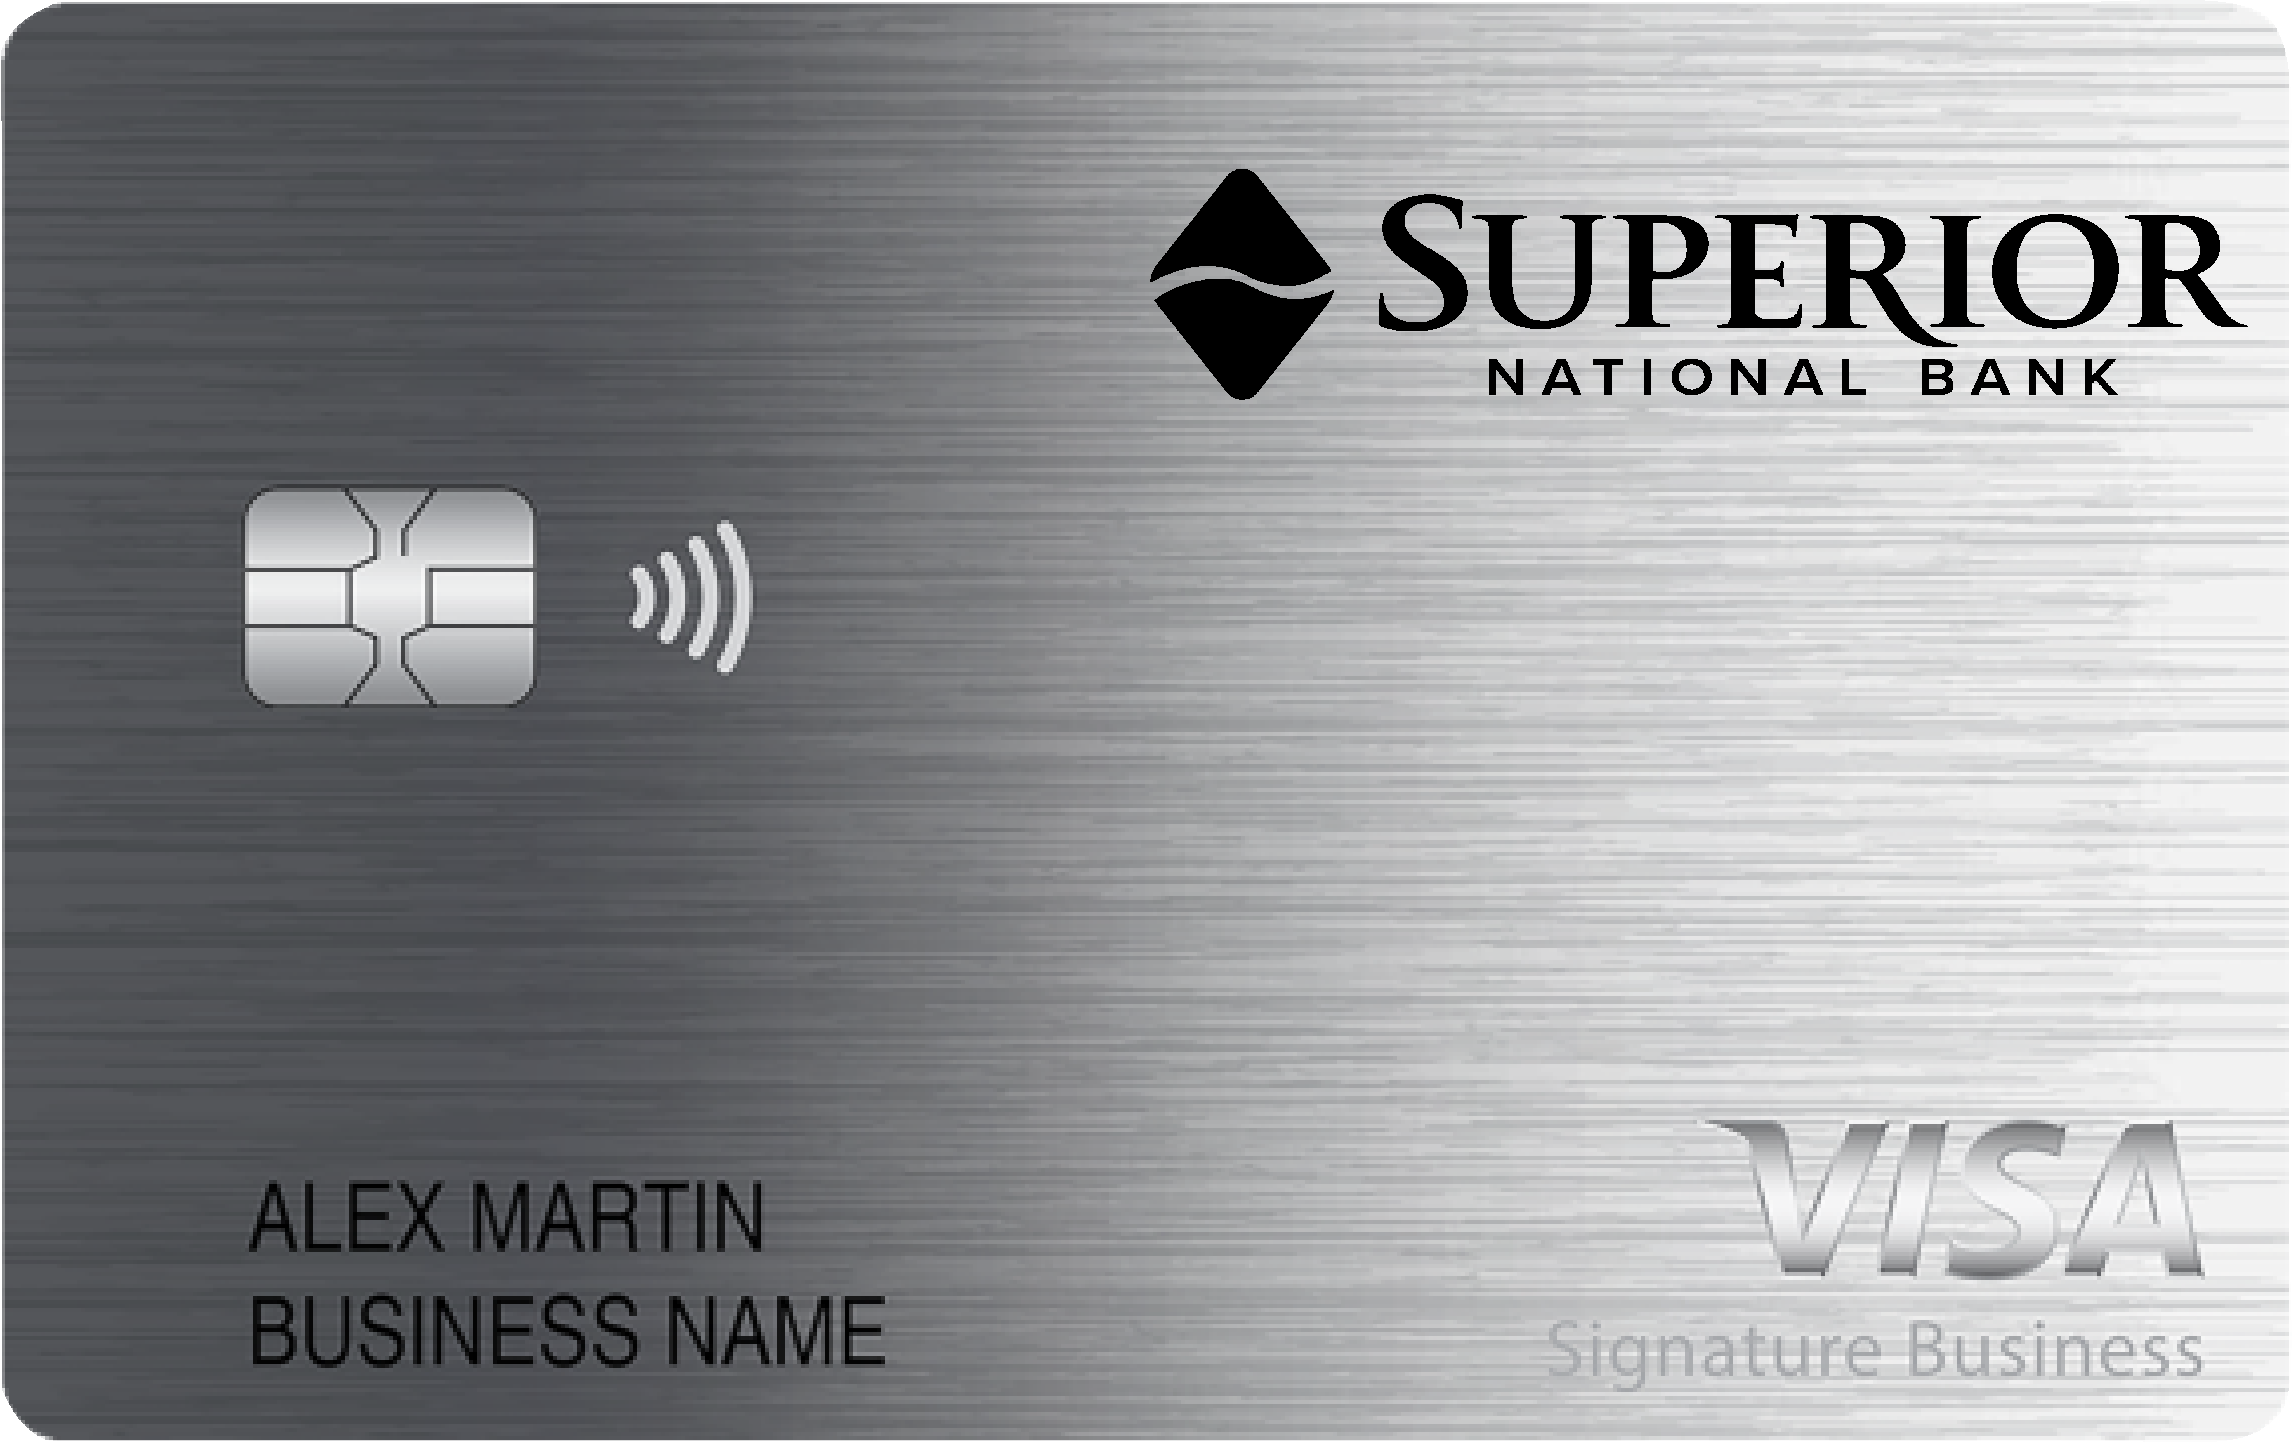 Superior National Bank Smart Business Rewards Card